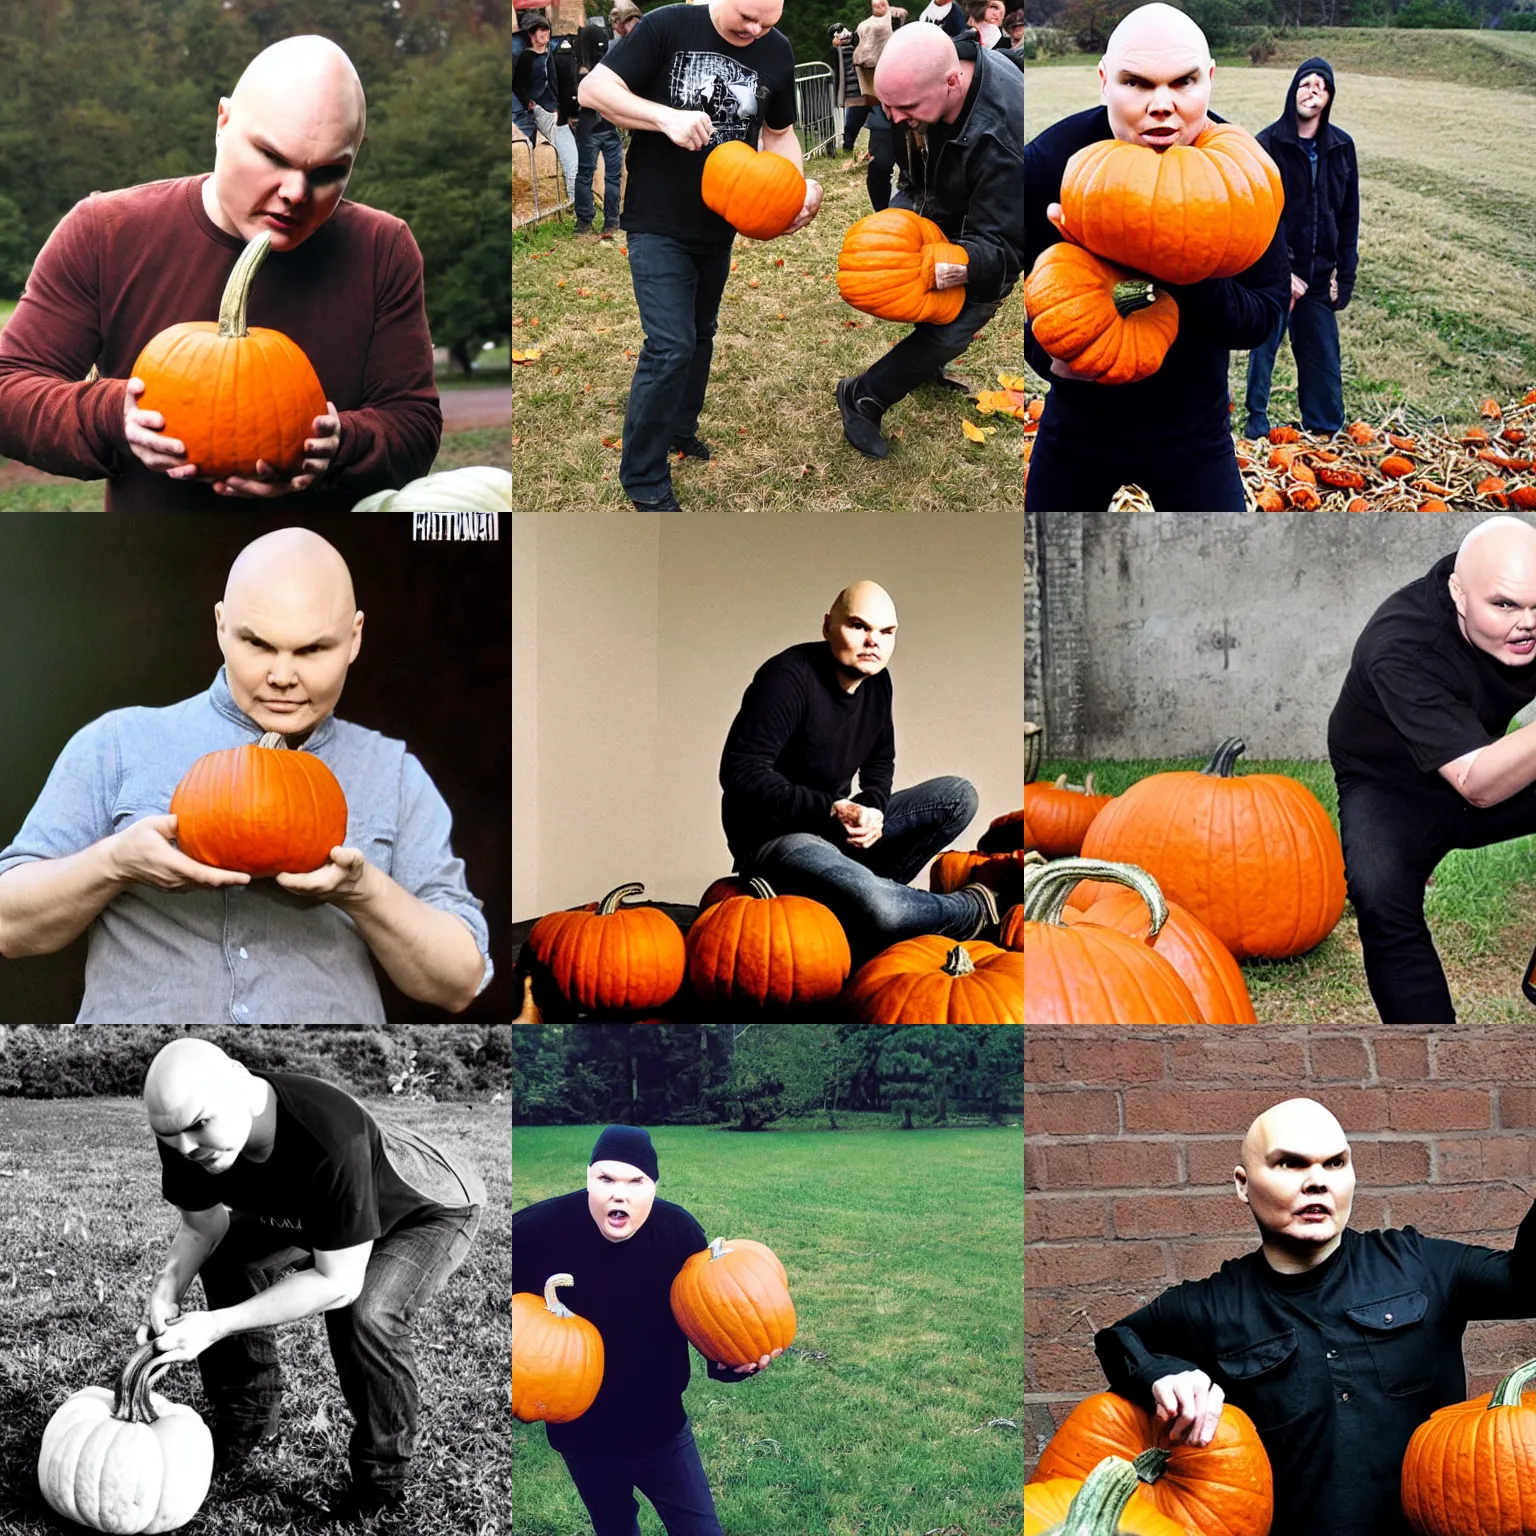 Prompt: billy corgan smashing a pumpkin